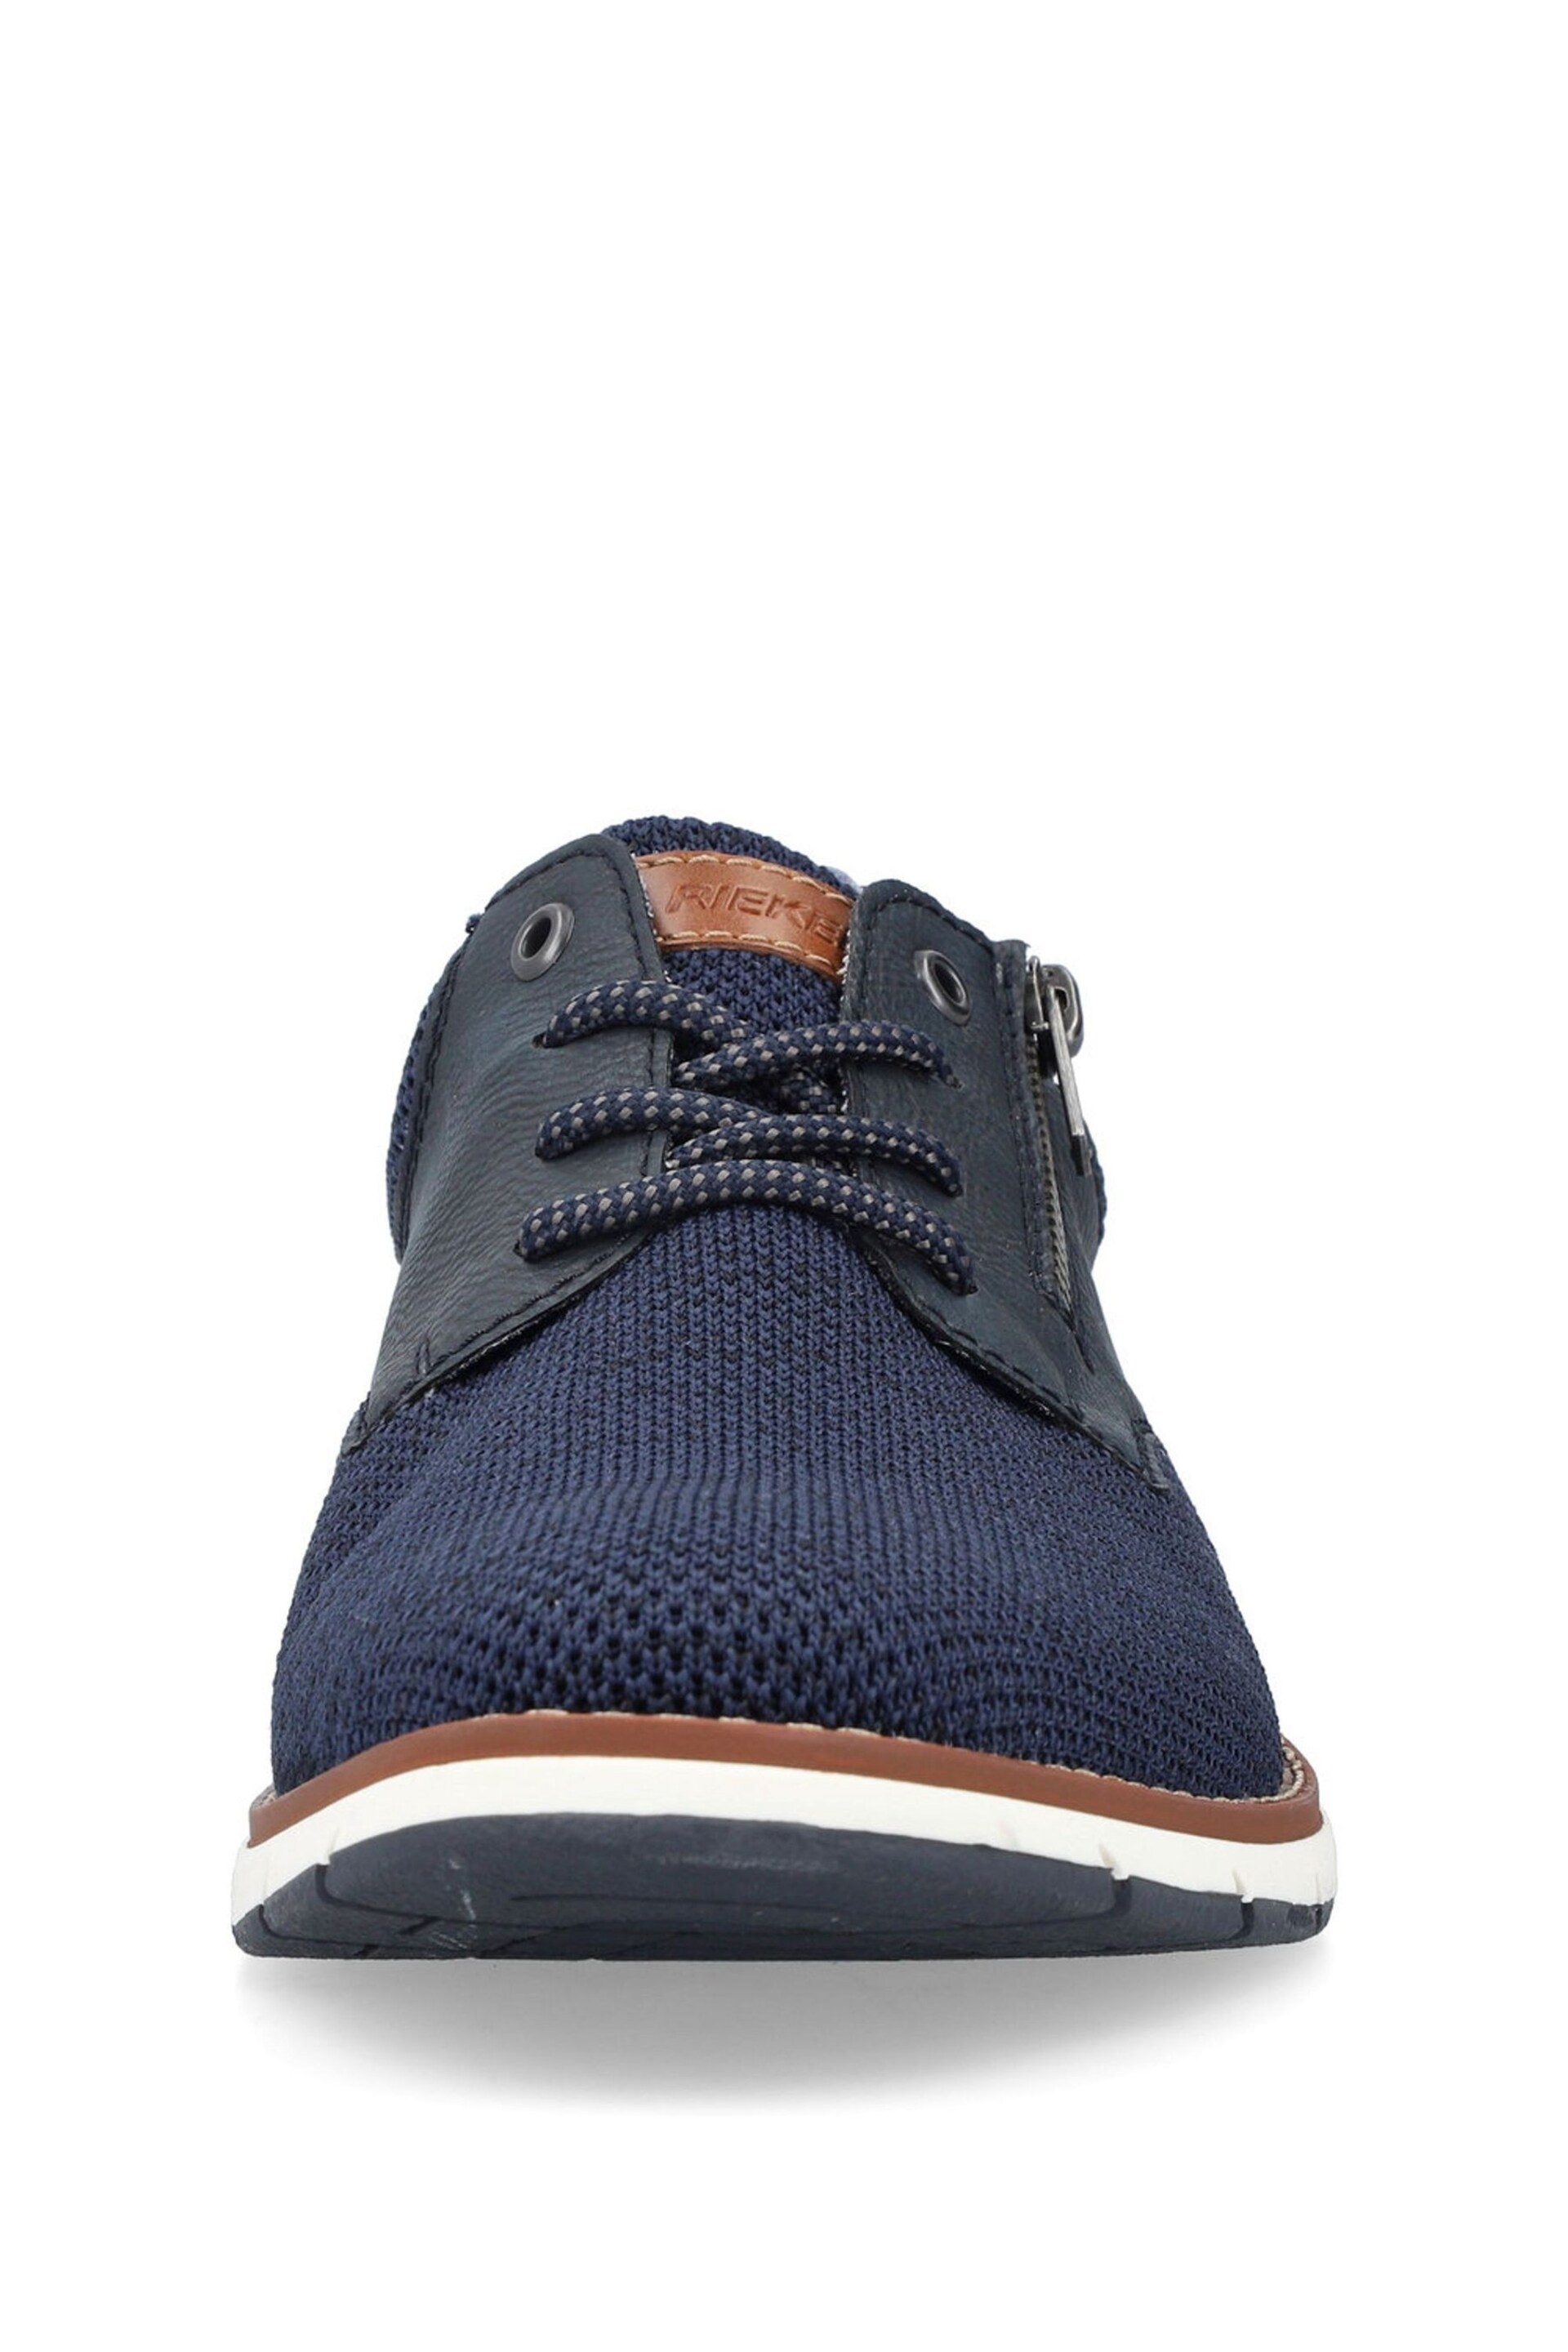 Rieker Mens Blue Zipper Shoes - Image 5 of 11